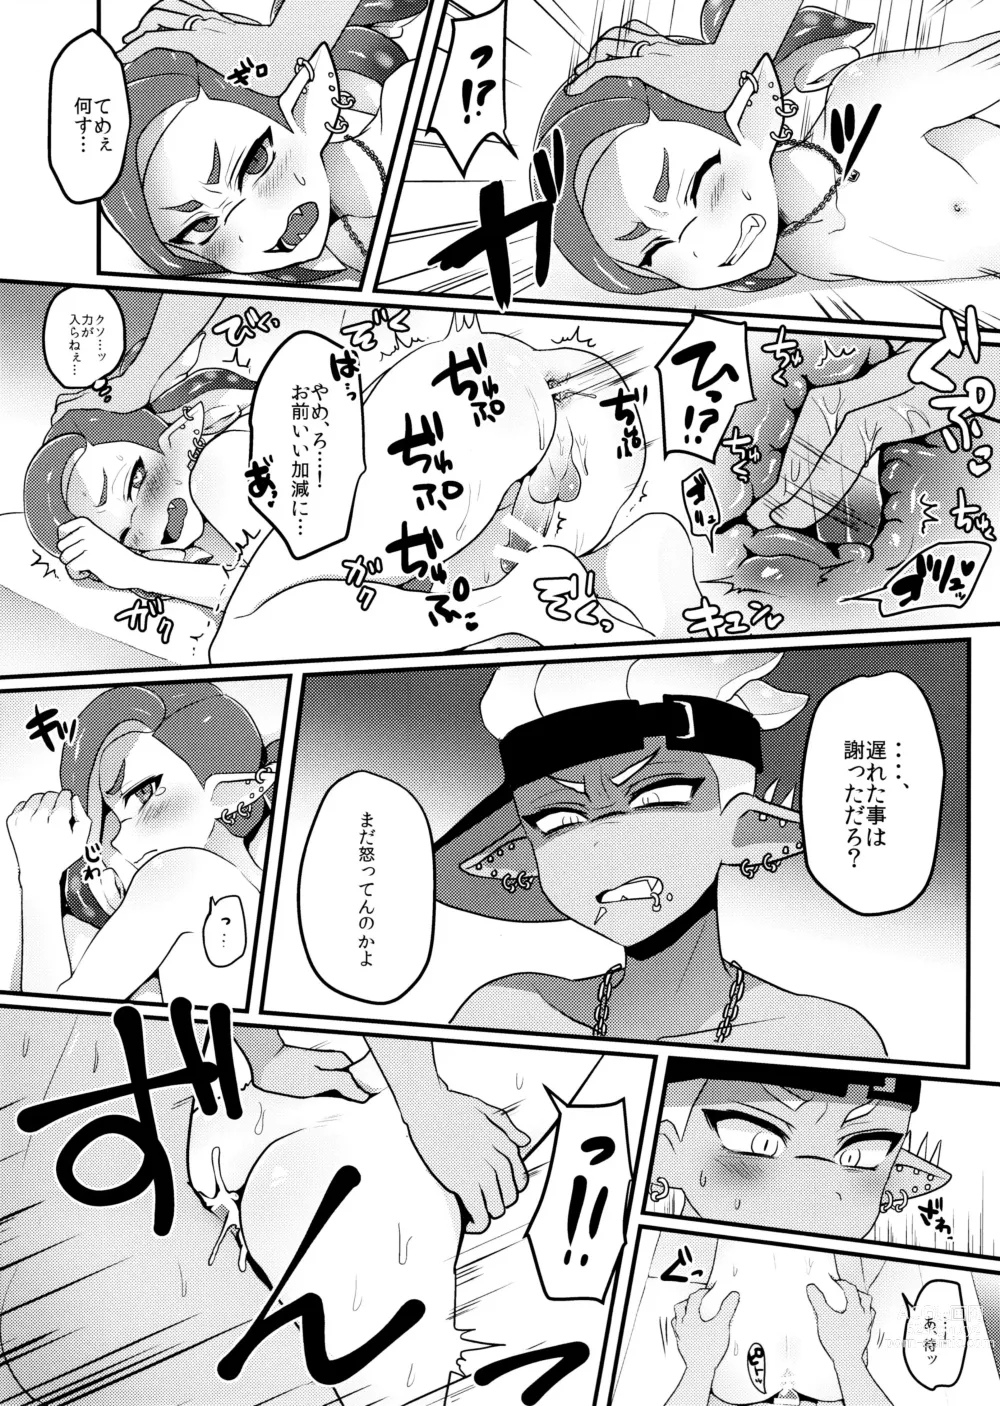 Page 12 of doujinshi Hoshoko